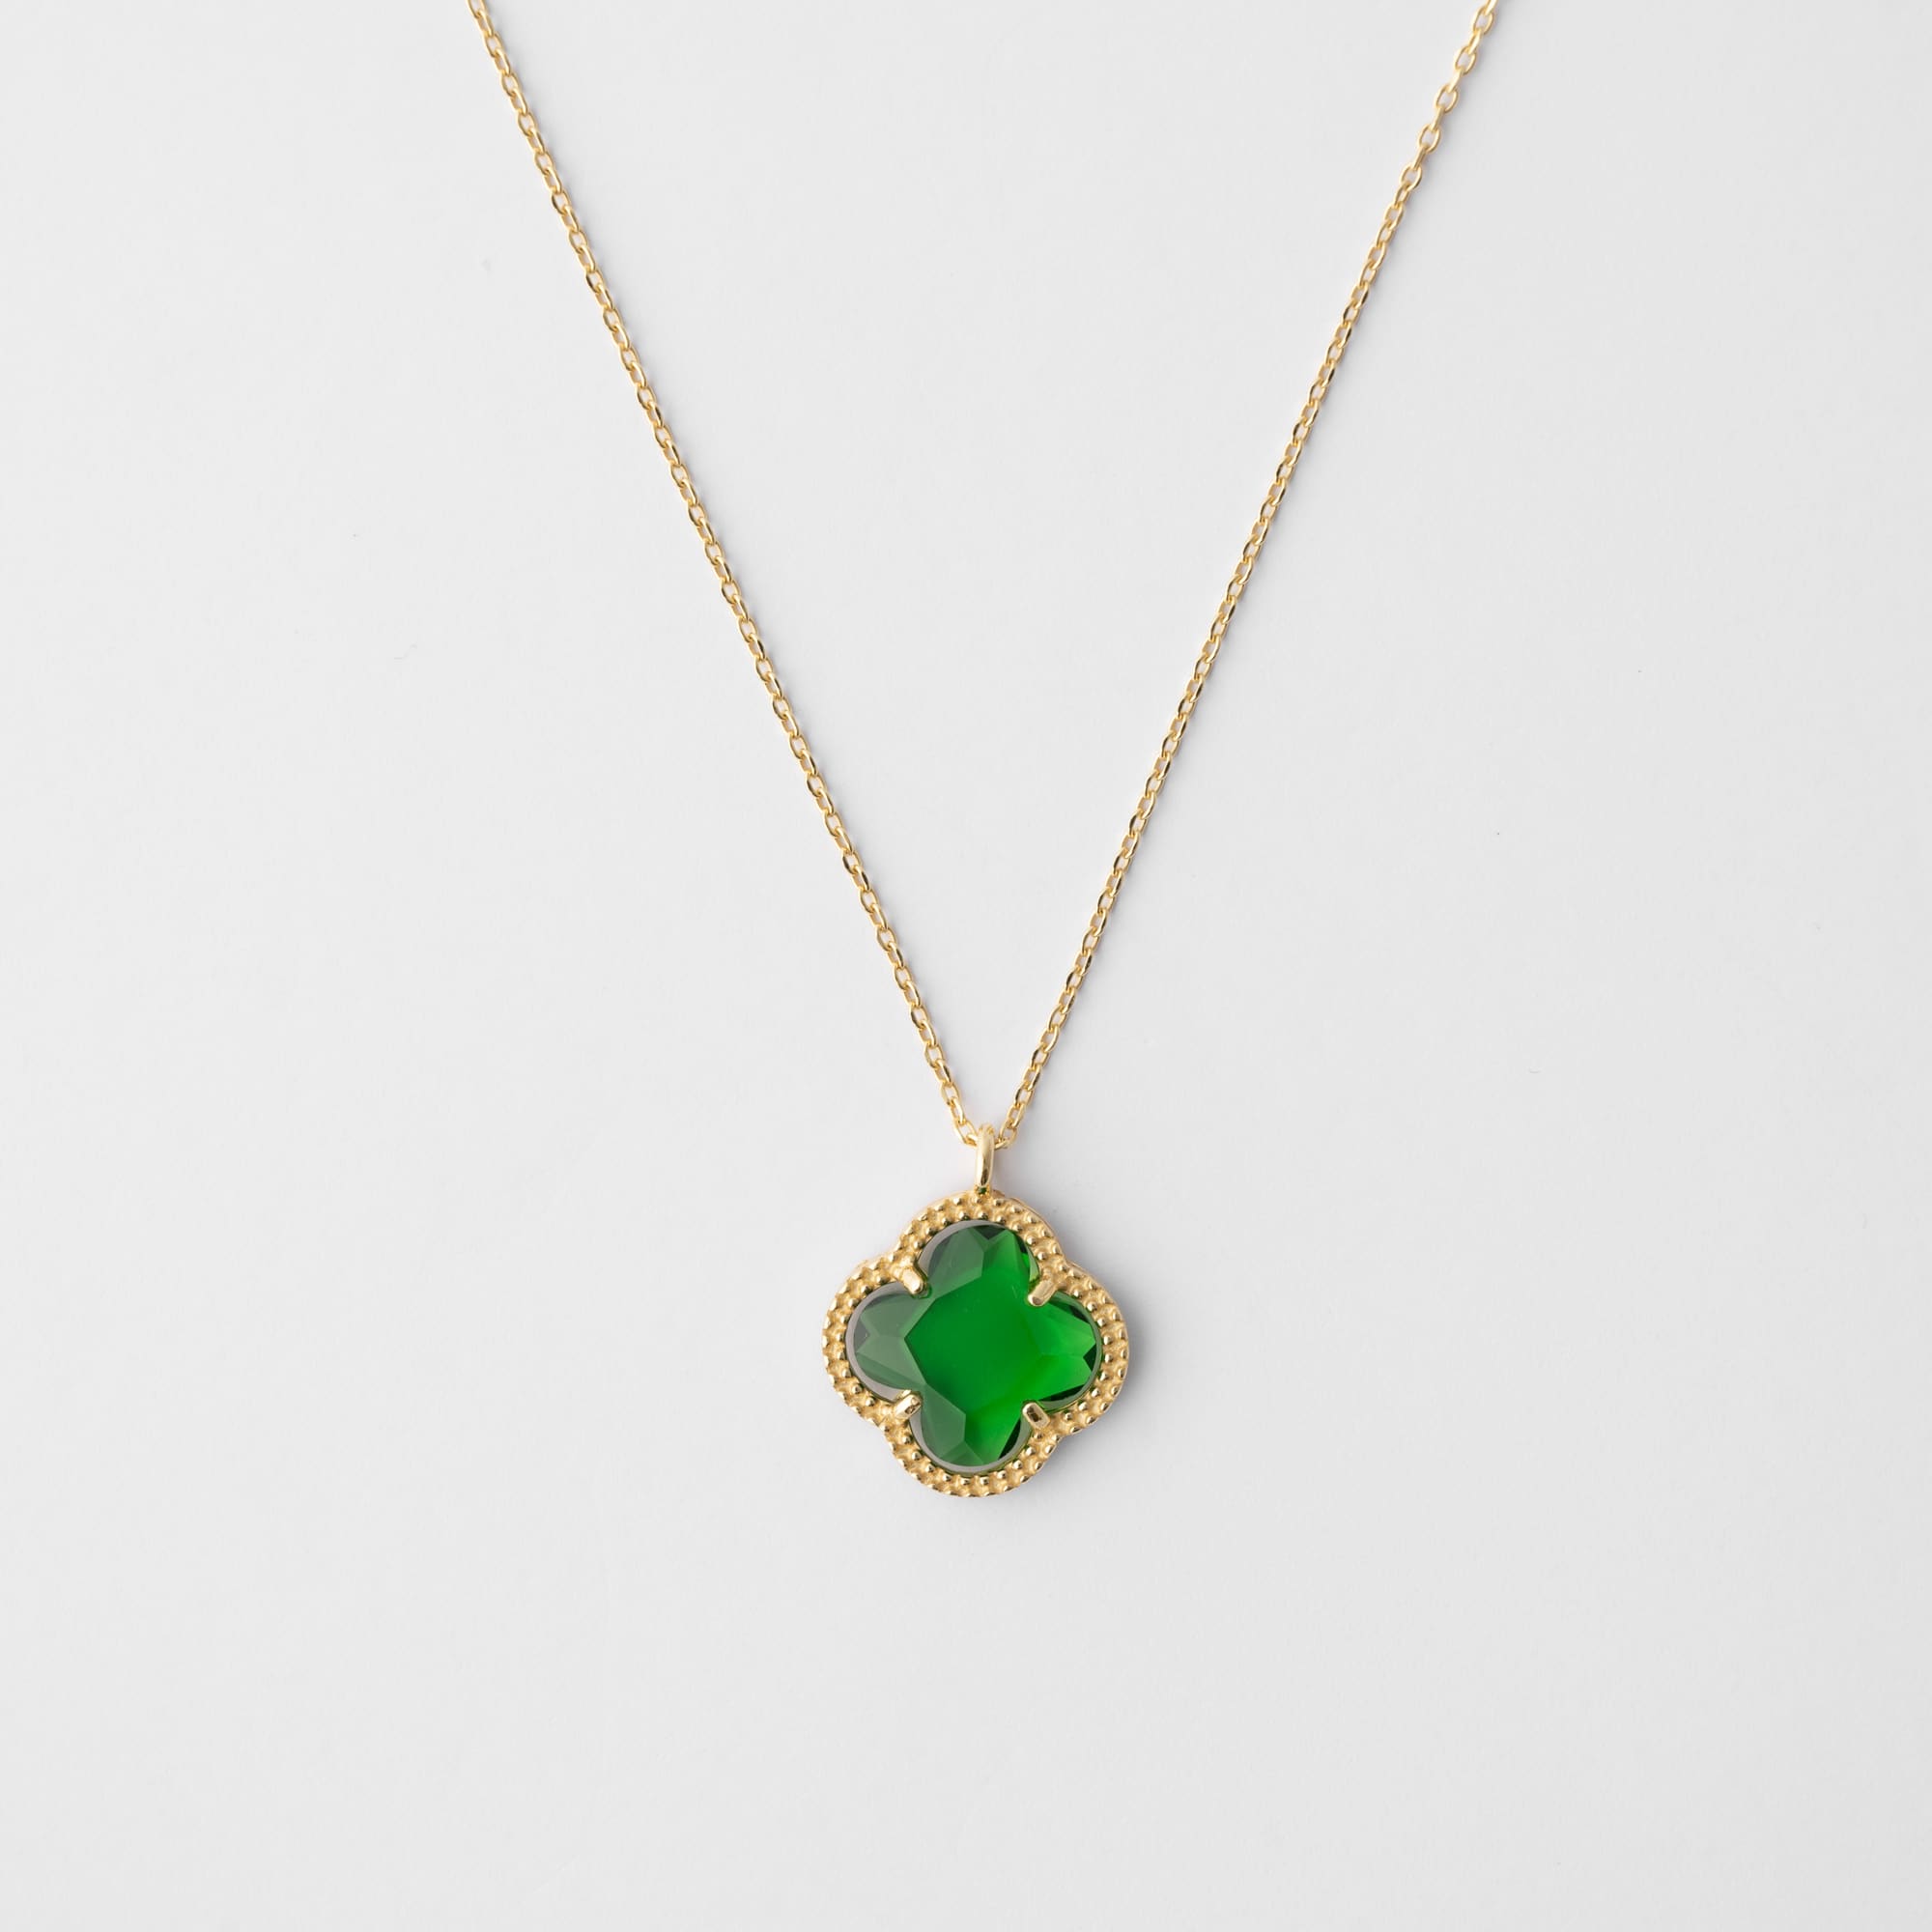 CLOVERLEAF Gold Neclace with Emerald Quartz